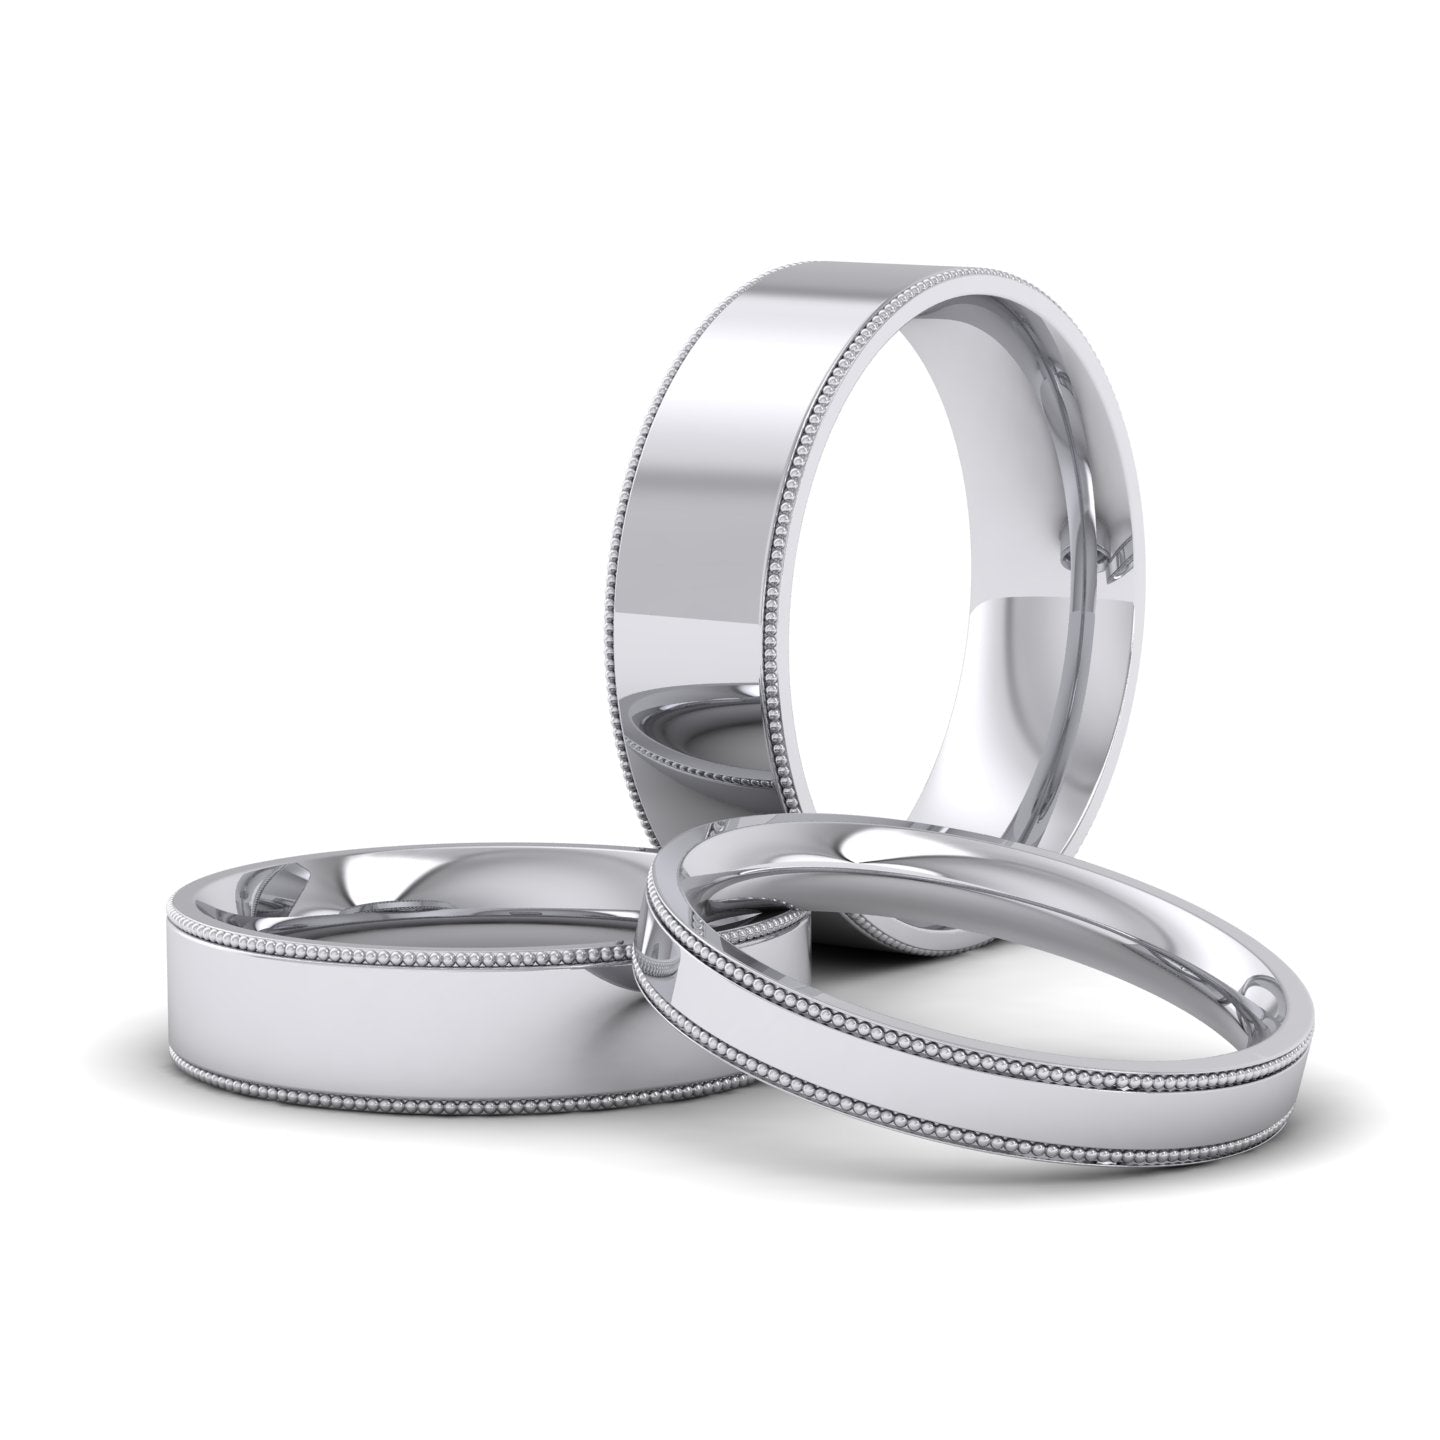 Millgrain Edge 950 Platinum 5mm Flat Comfort Fit Wedding Ring L